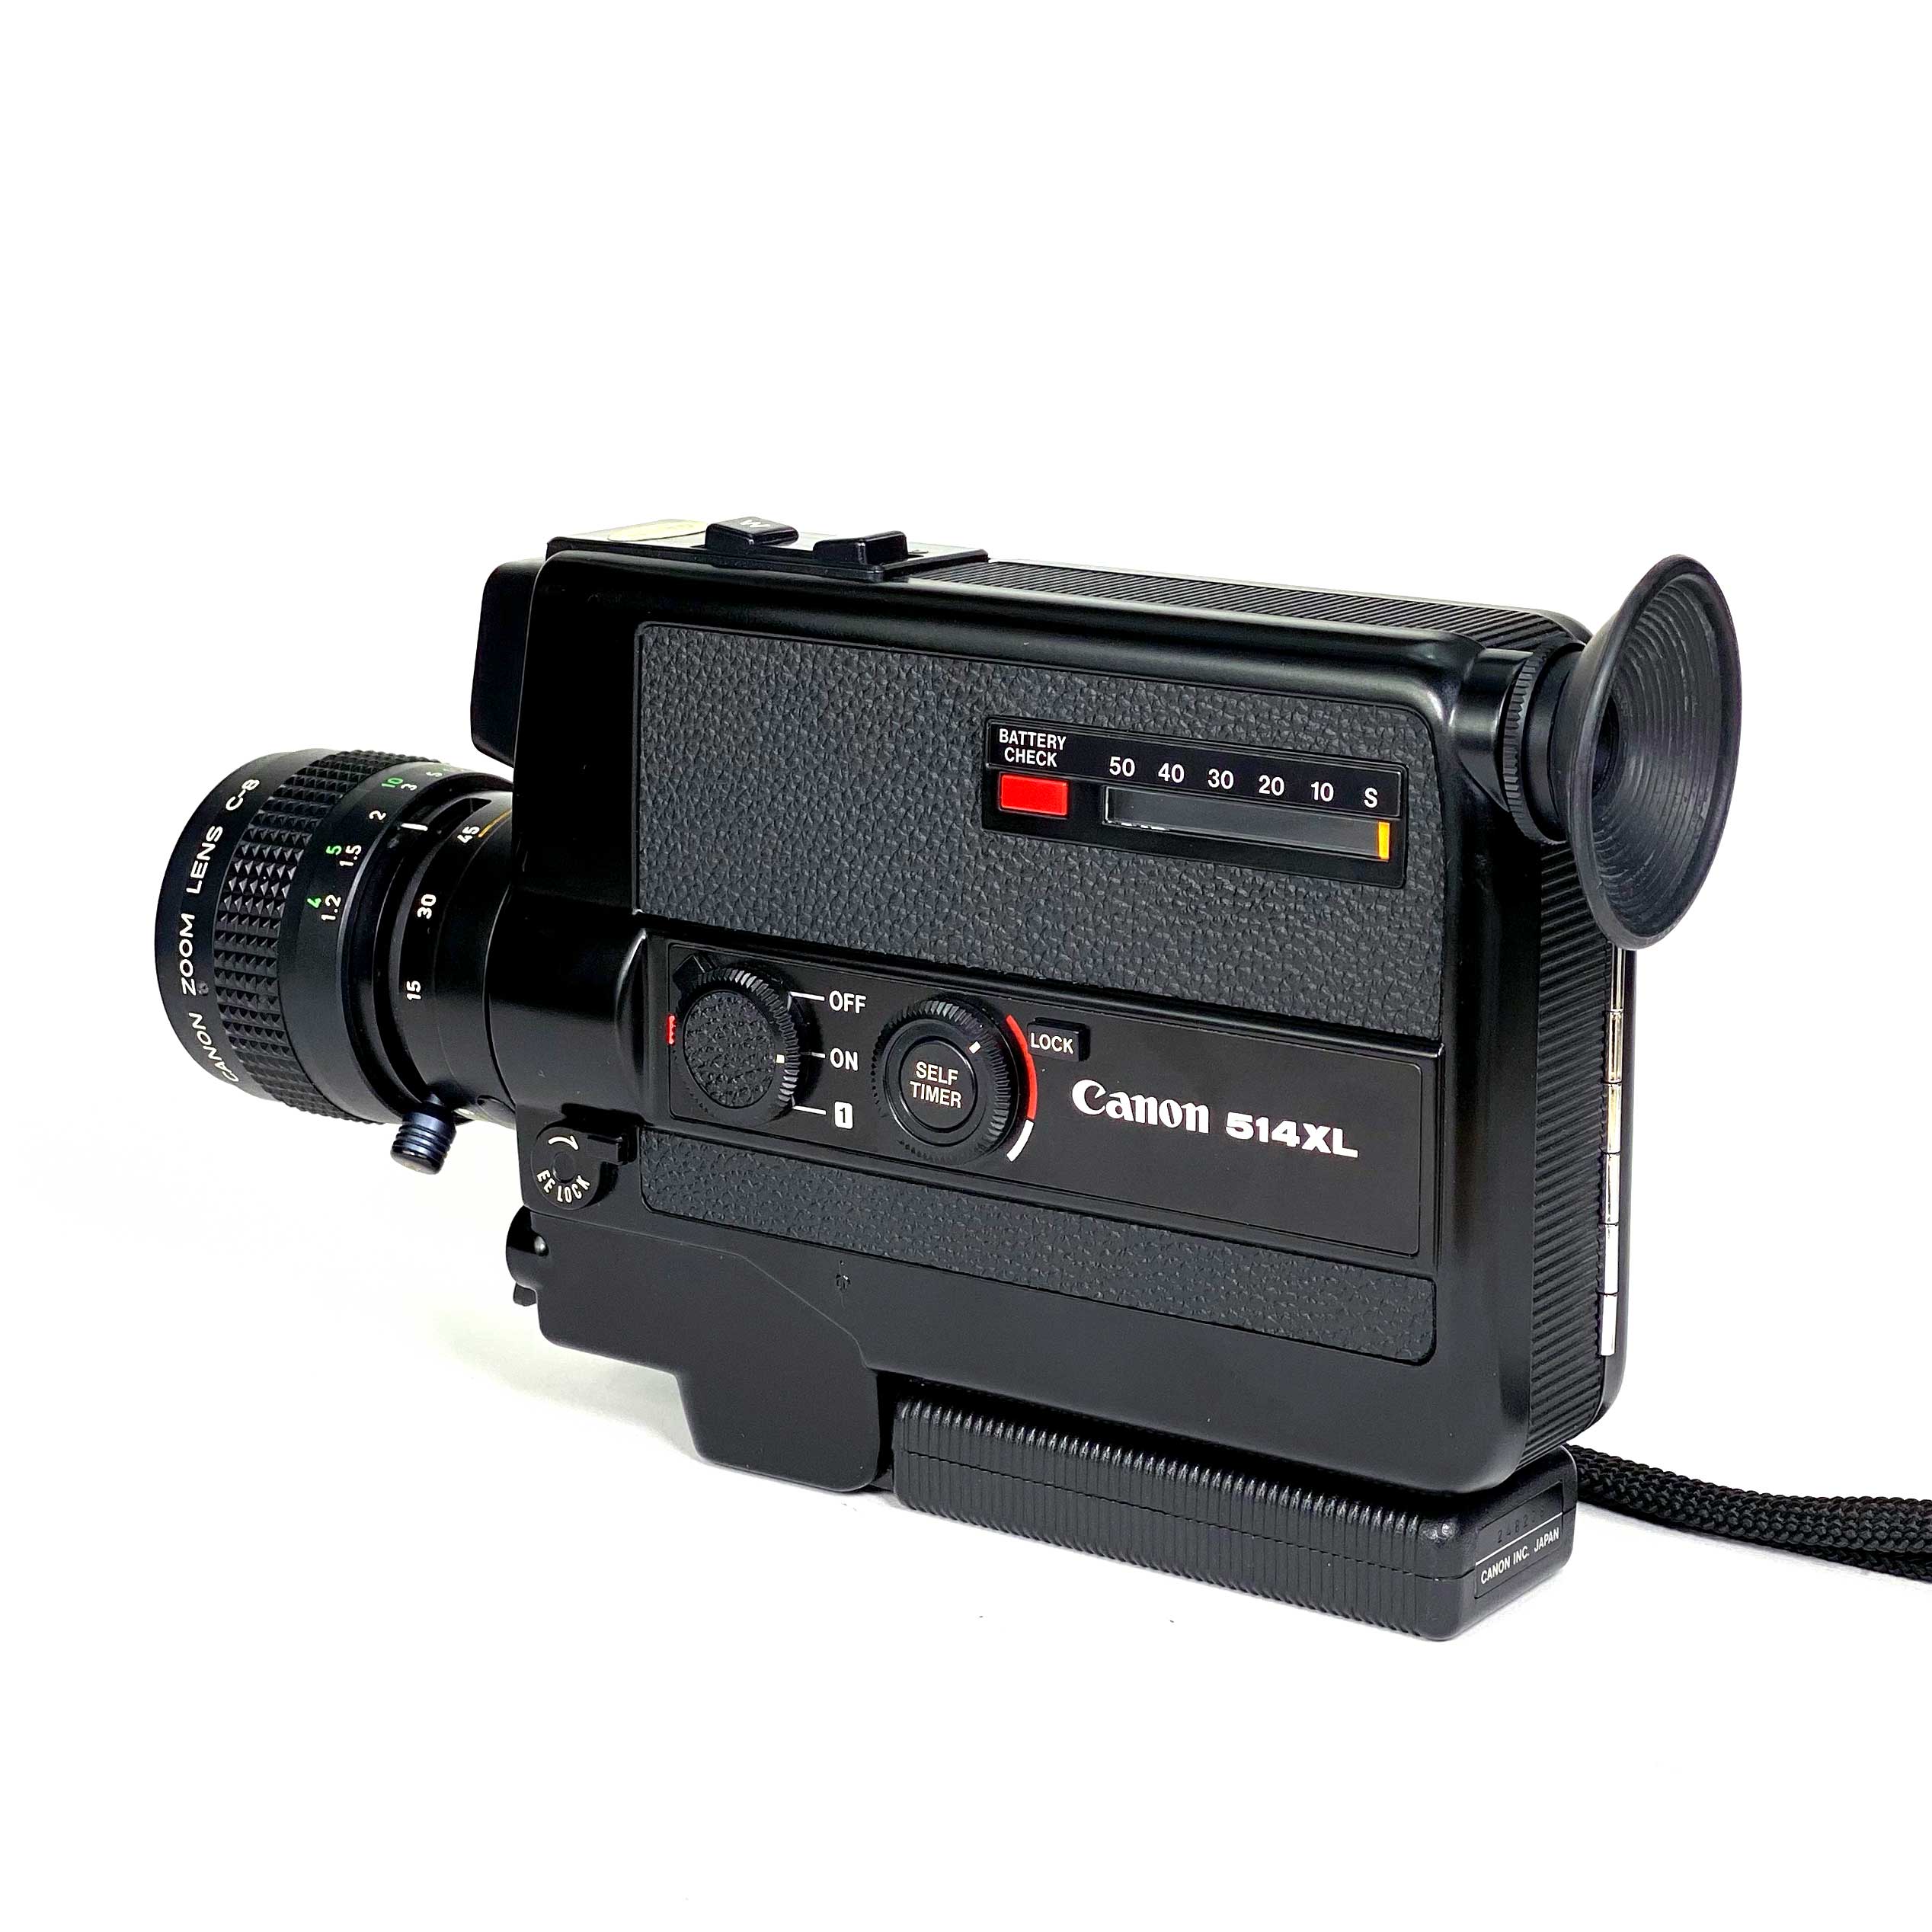 CANON 514XL 8ミリカメラ ビデオカメラ - フィルムカメラ